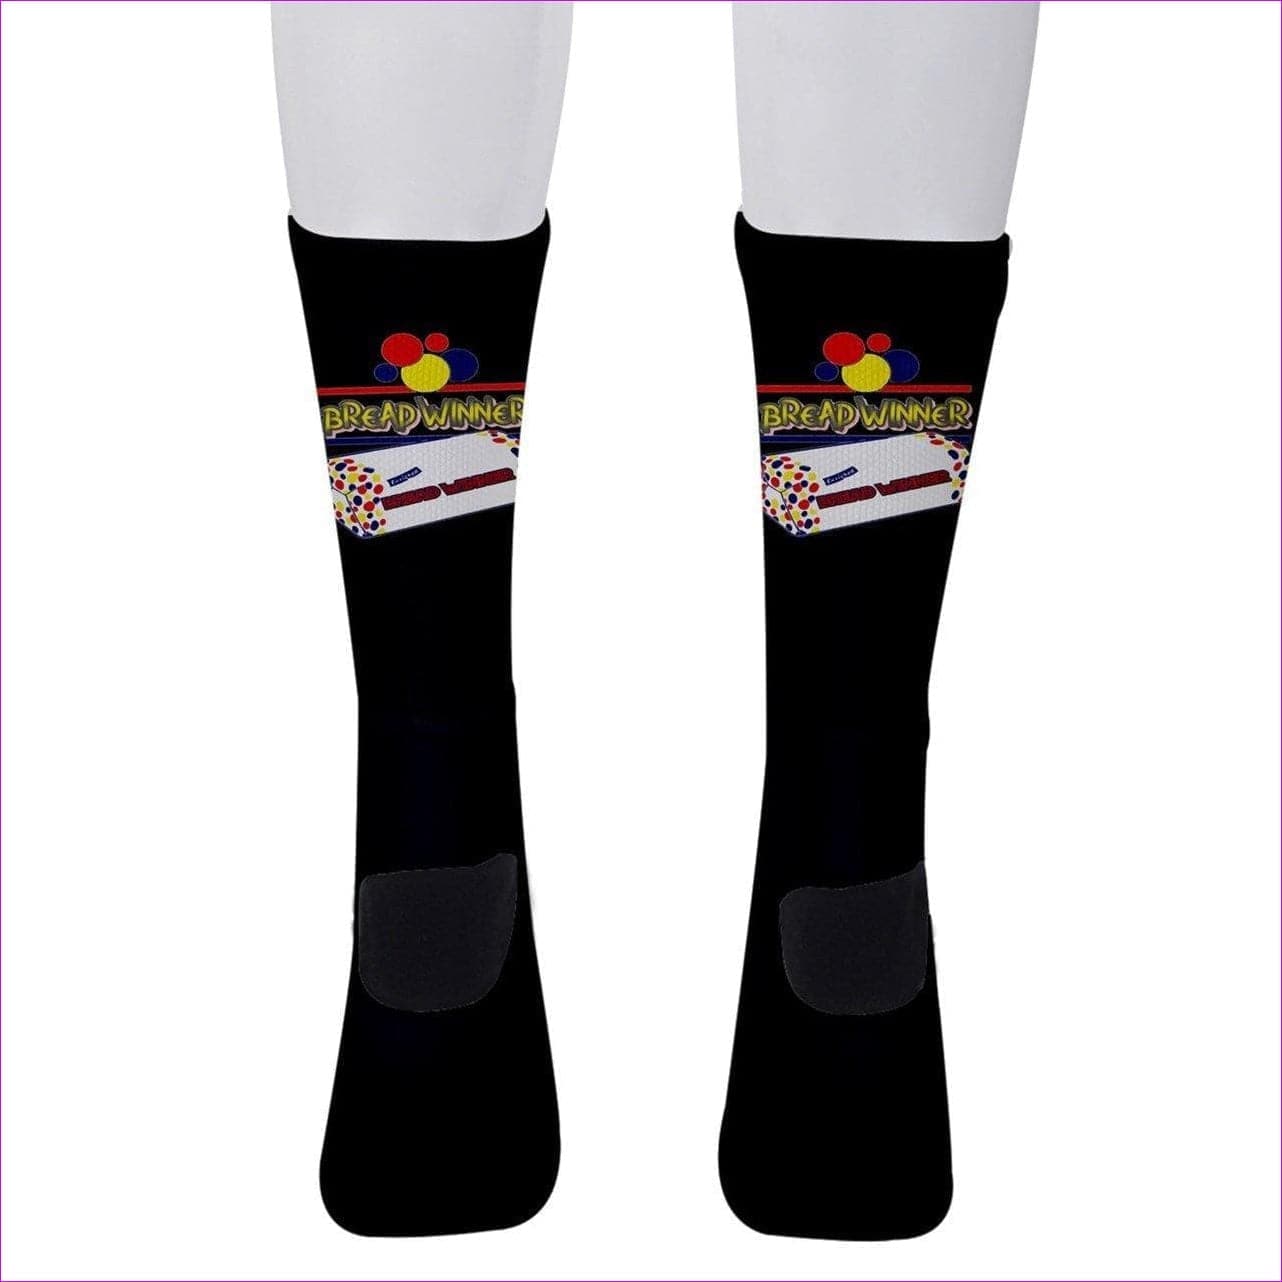 black One Size Bread Winner Men's Crew Socks -4 colors - socks at TFC&H Co.